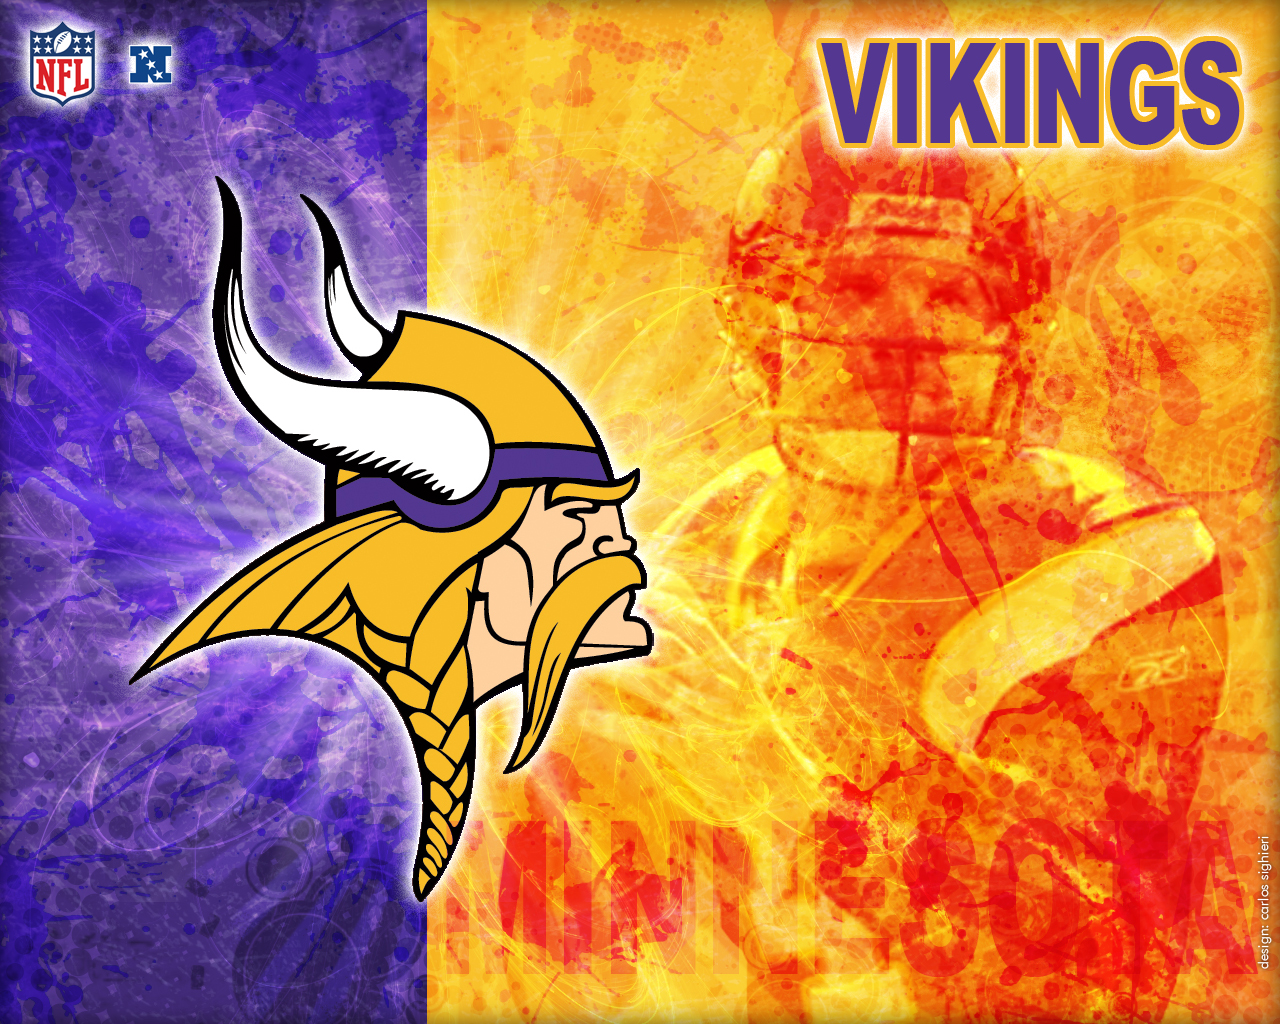 Related Minnesota Vikings Wallpaper Uby7o